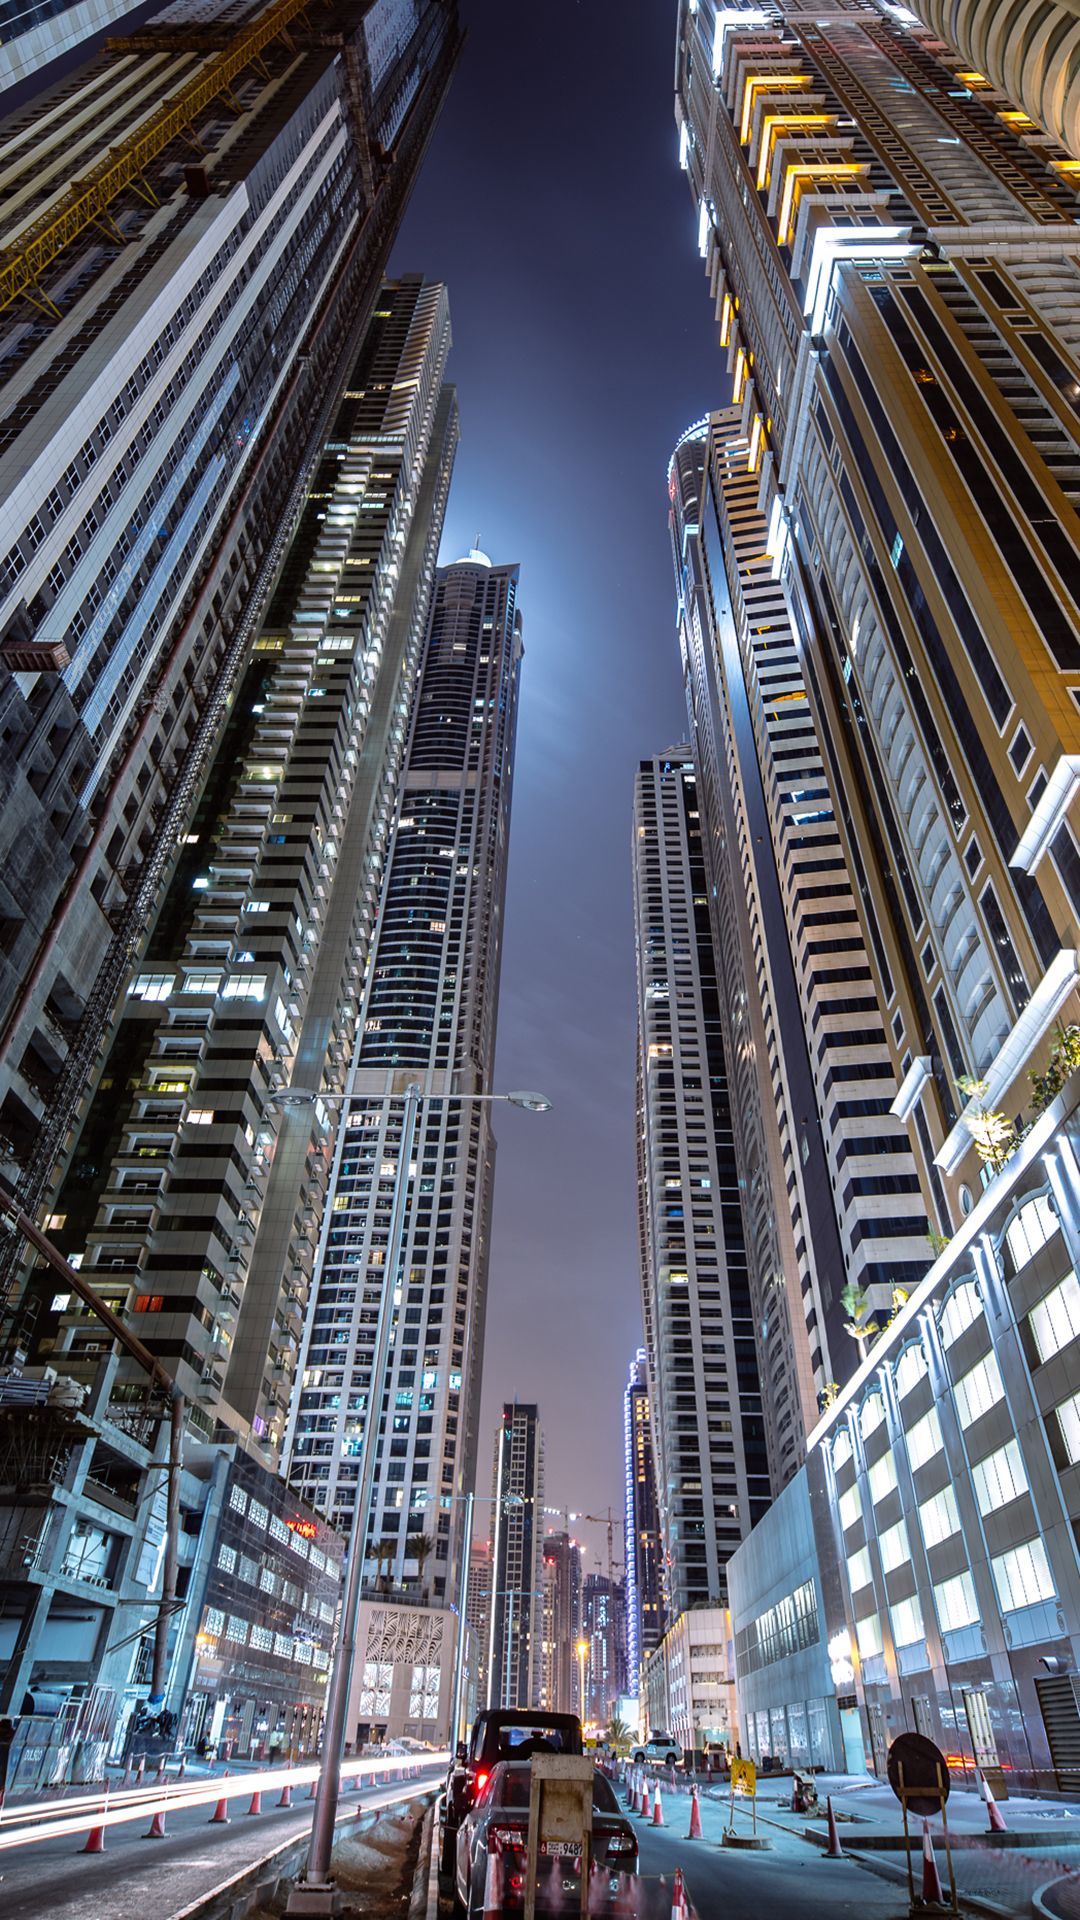 General 1080x1920 architecture building cityscape skyscraper city portrait display street night car United Arab Emirates Dubai road sign